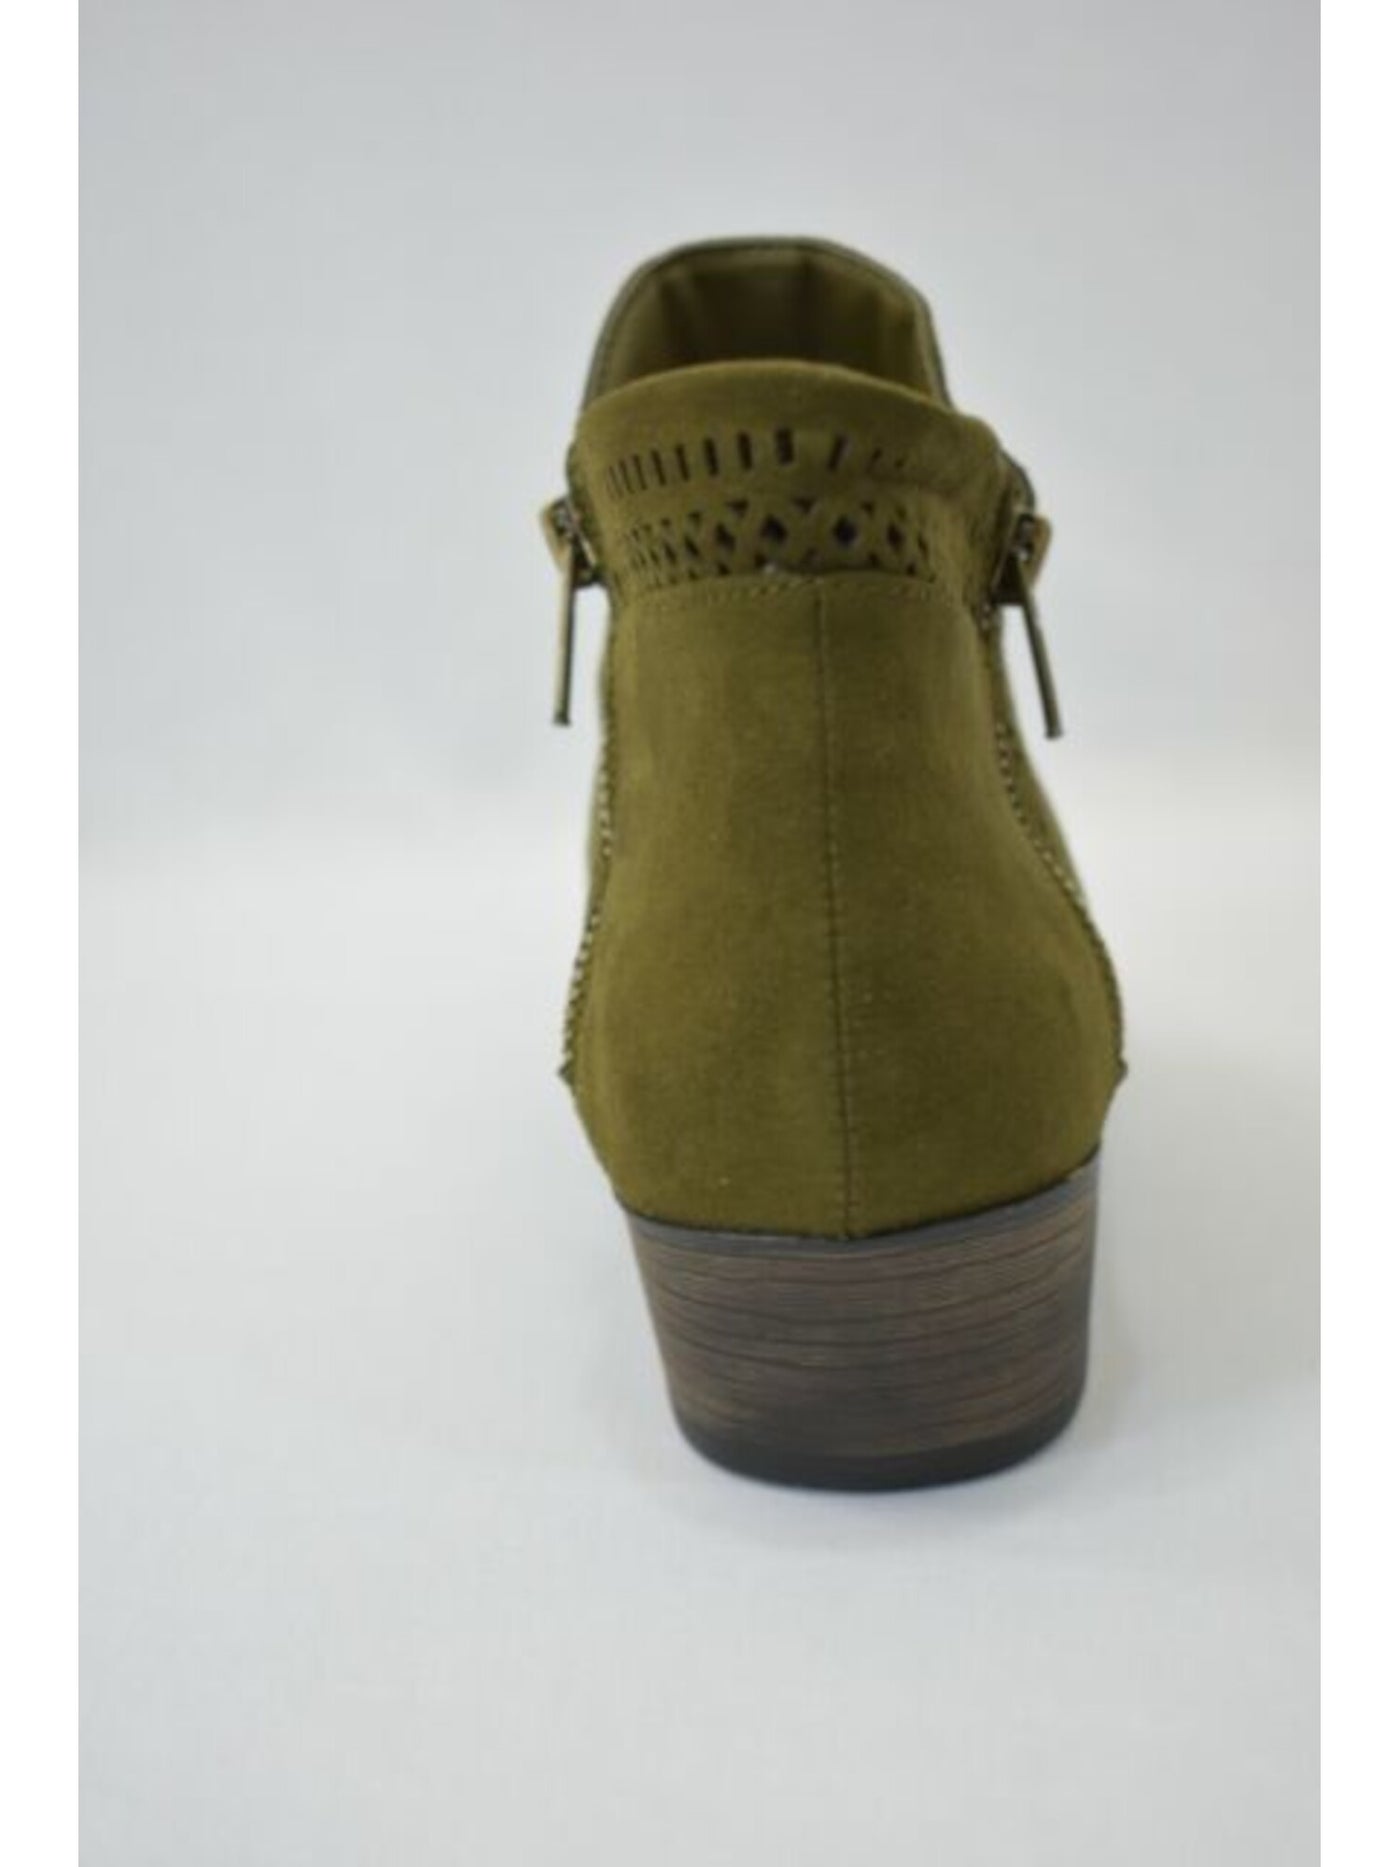 AMERICAN RAG Shoes Green Juniors 7.5 M